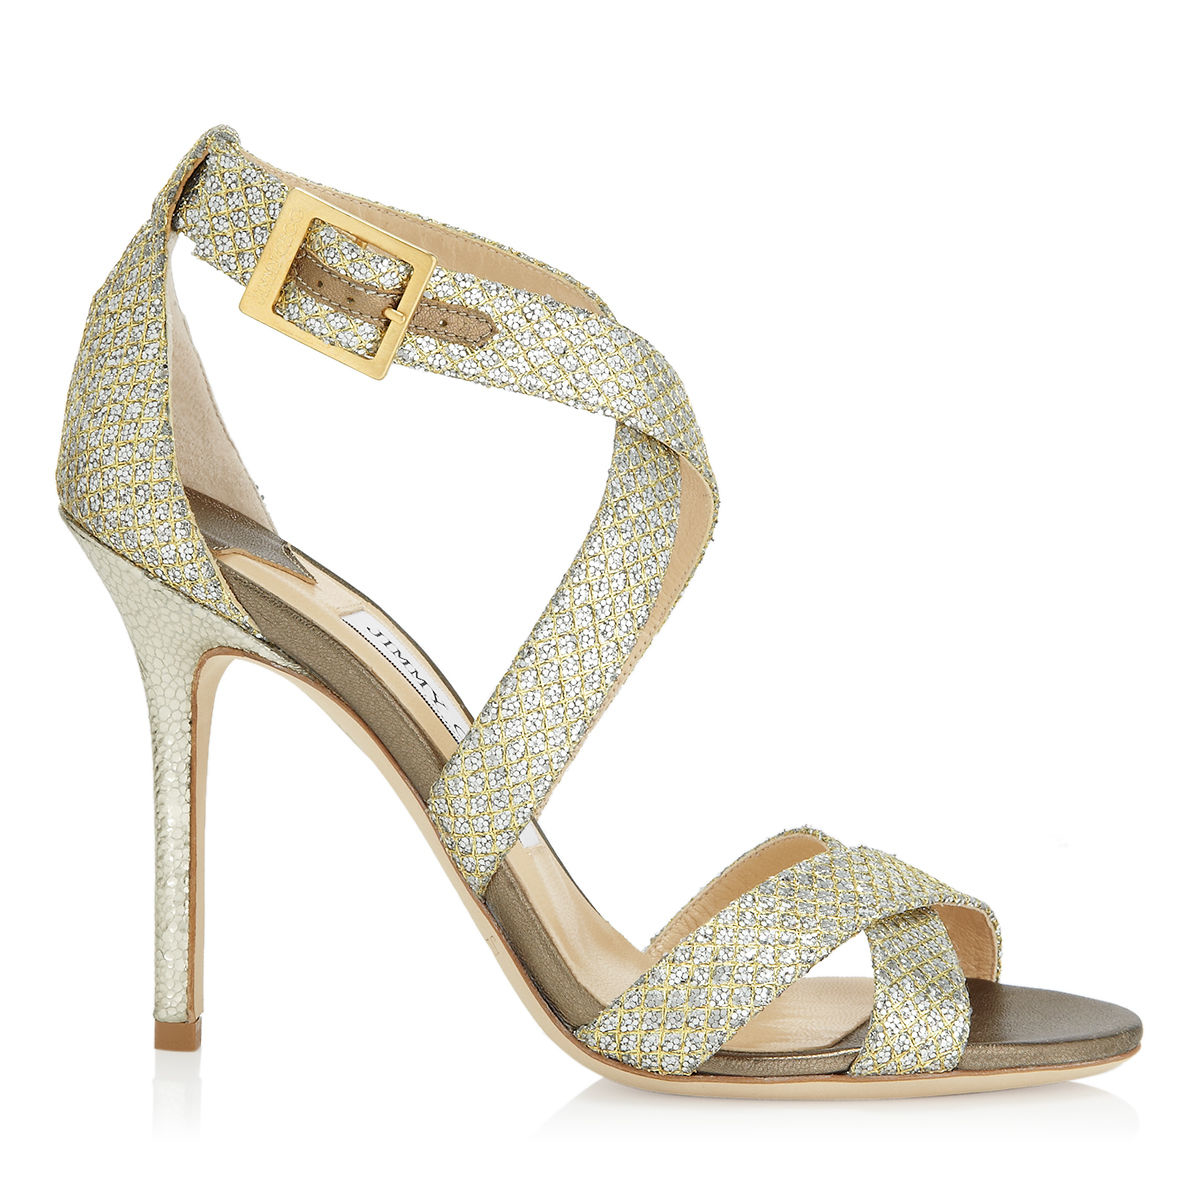 Lyst - Jimmy Choo Lottie Champagne Glitter Fabric Sandals in Metallic